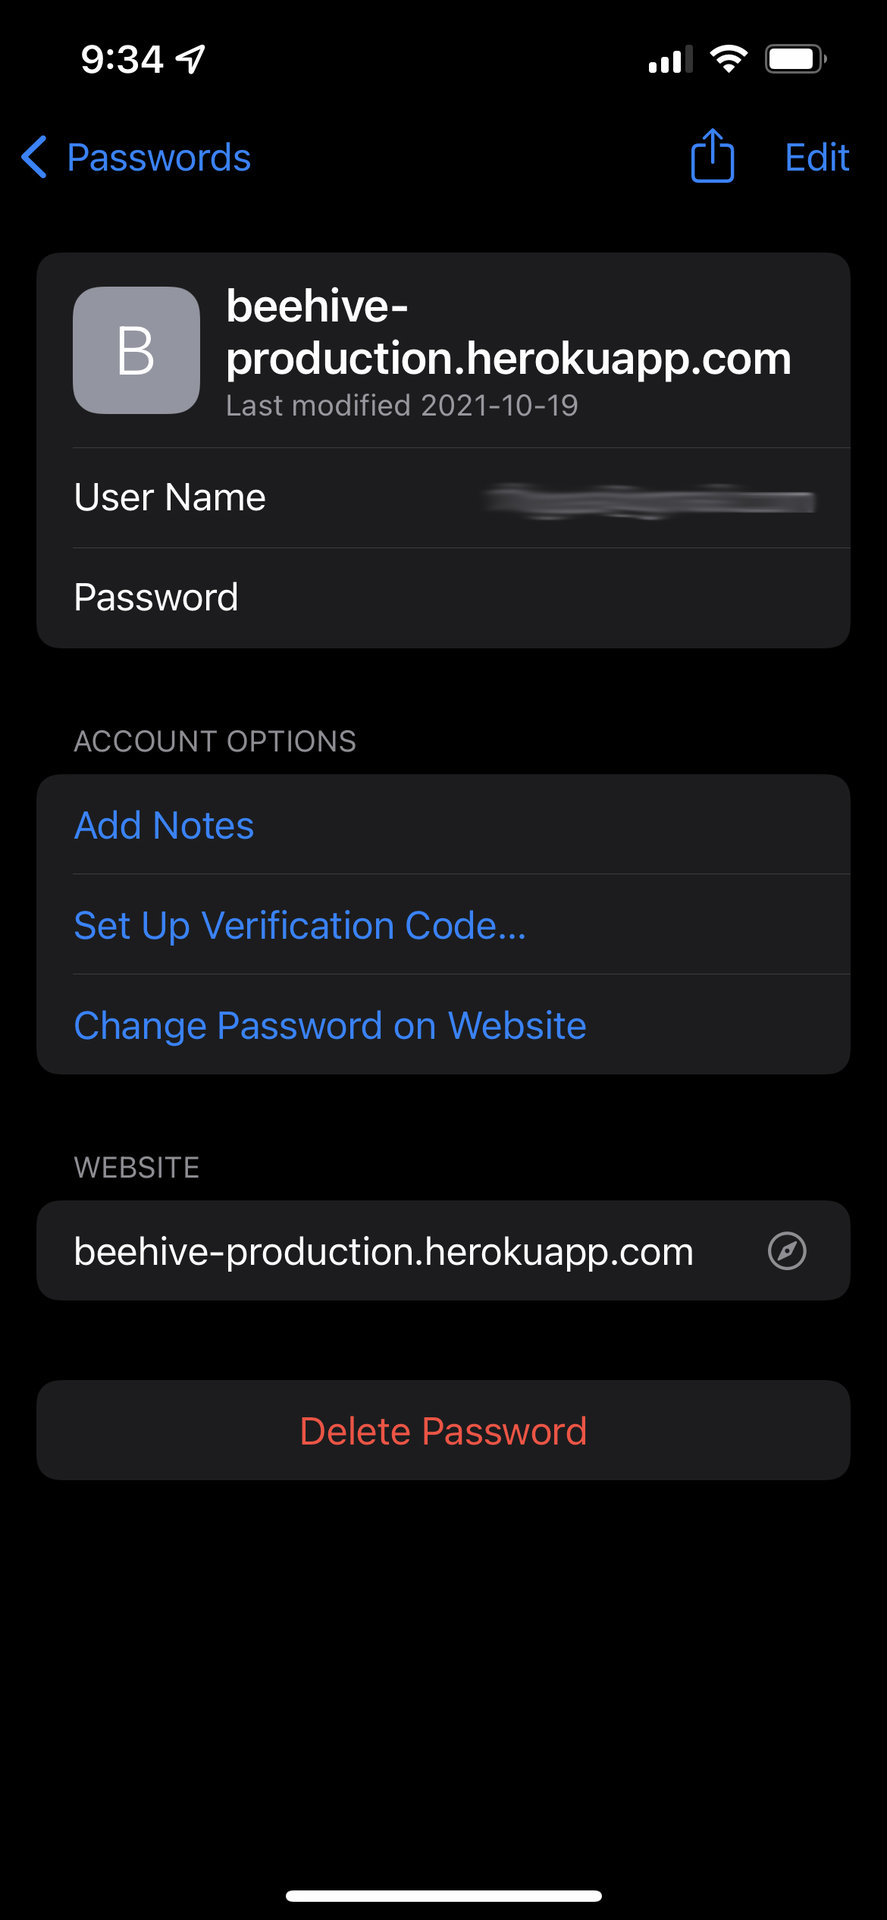 Password details in iOS 15 Settings